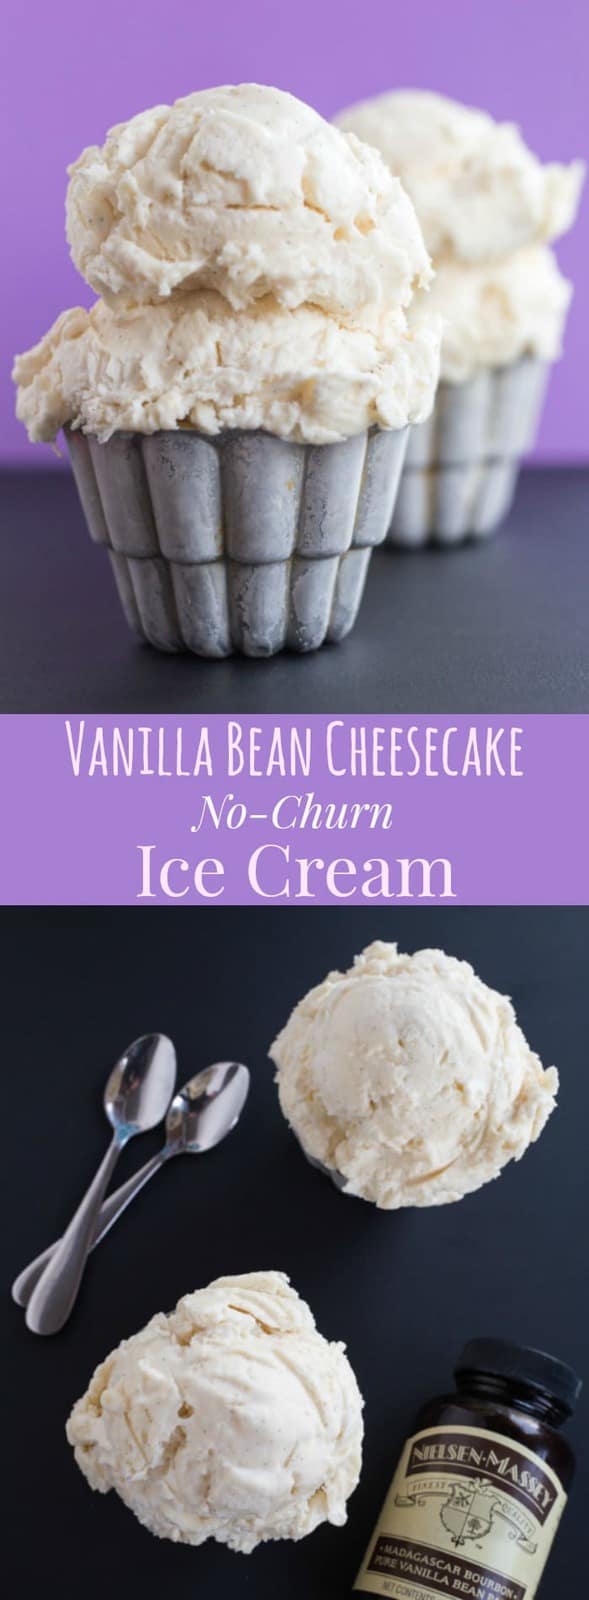 Vanilla Bean Cheesecake No-Churn Ice Cream - Cupcakes ... - 589 x 1600 jpeg 61kB